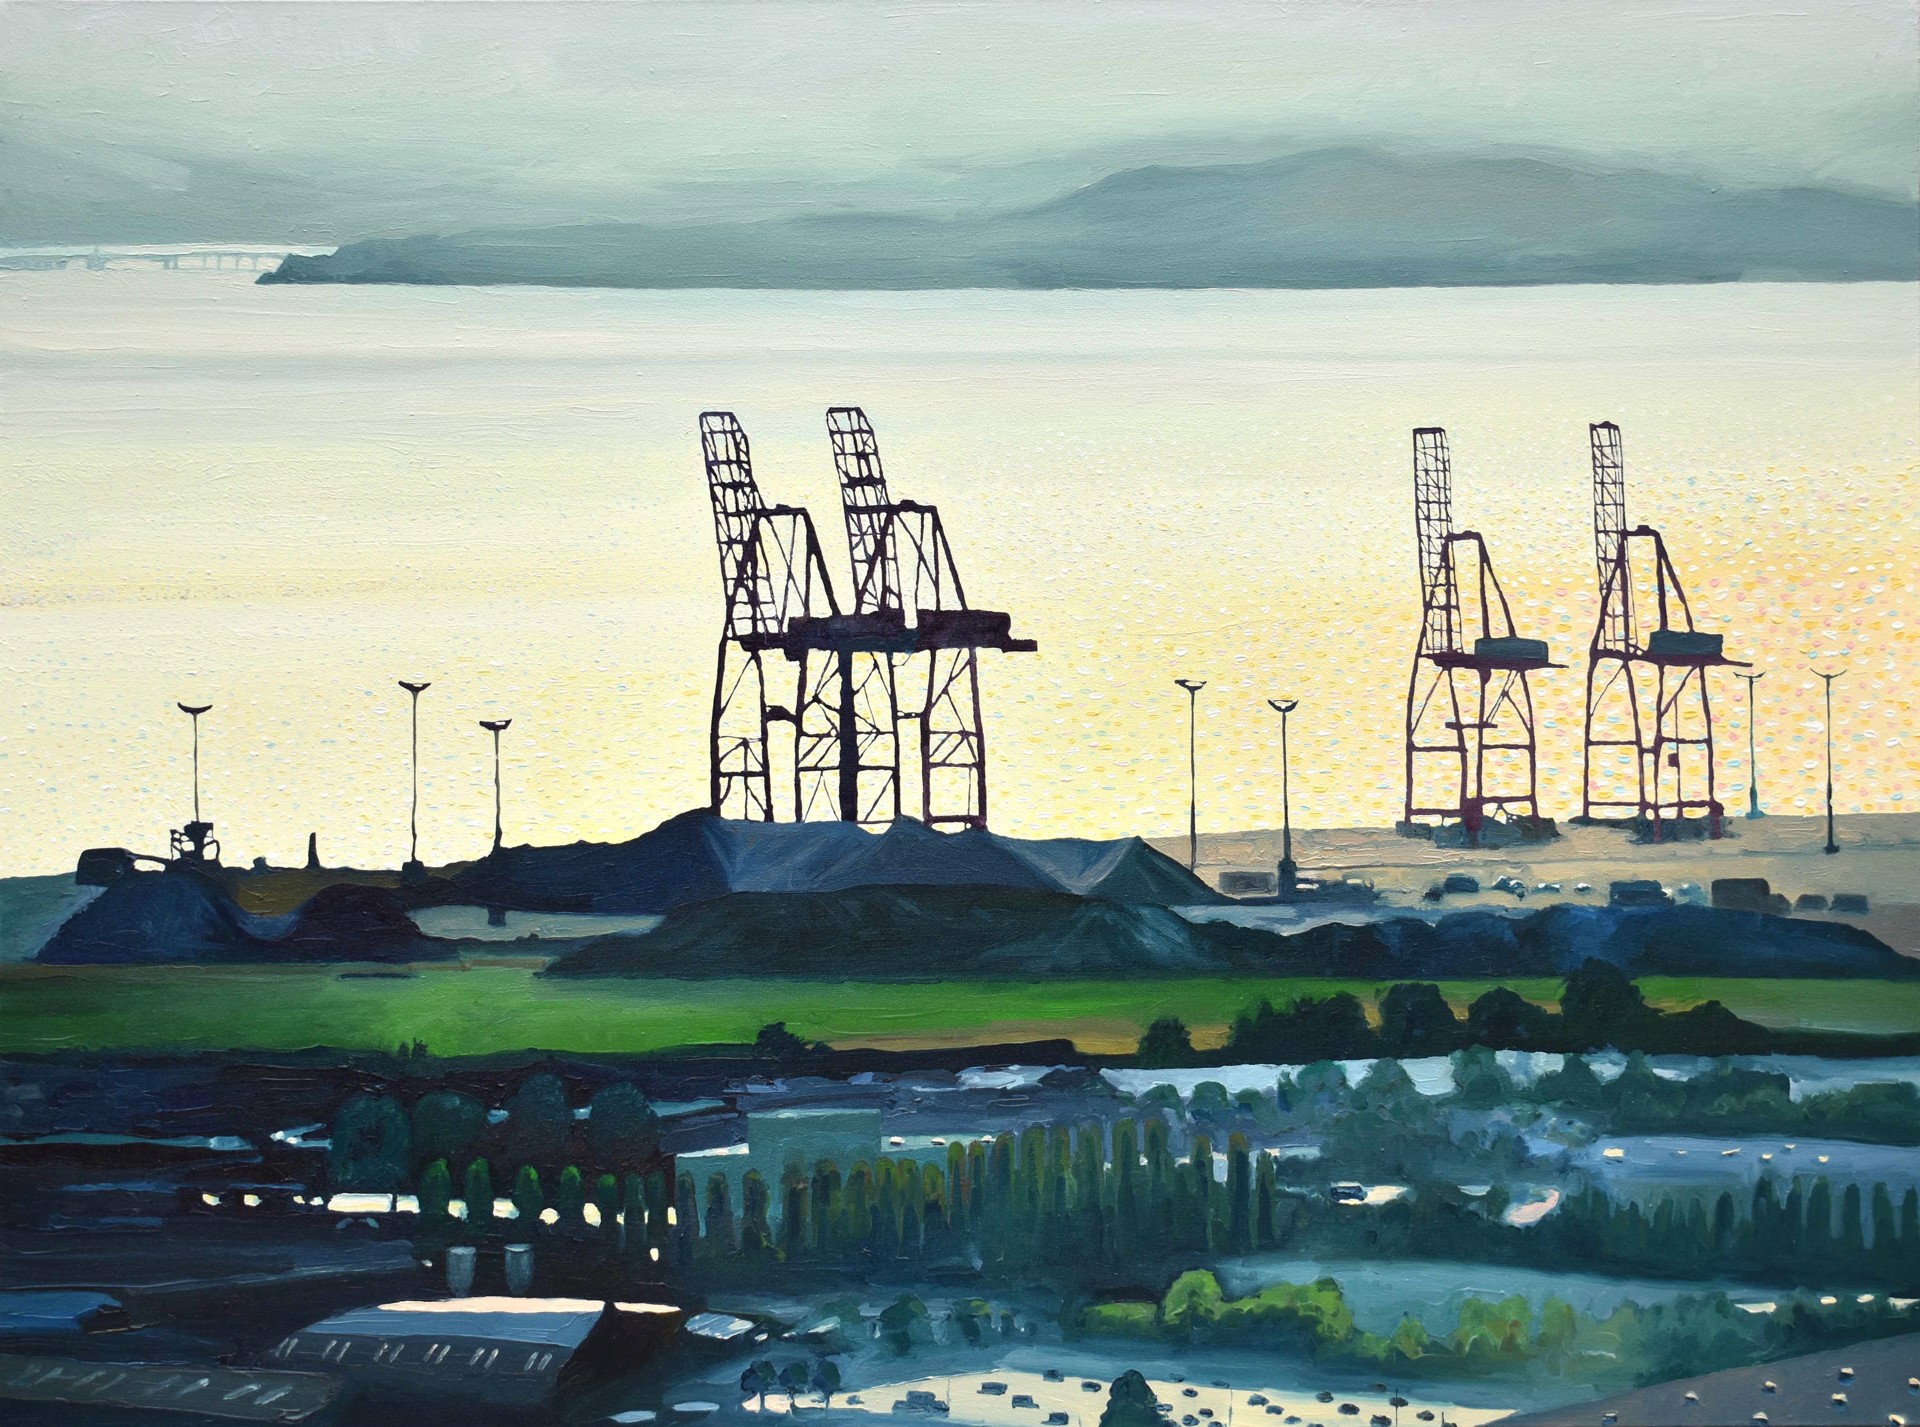 Bay Cranes by David Leonard